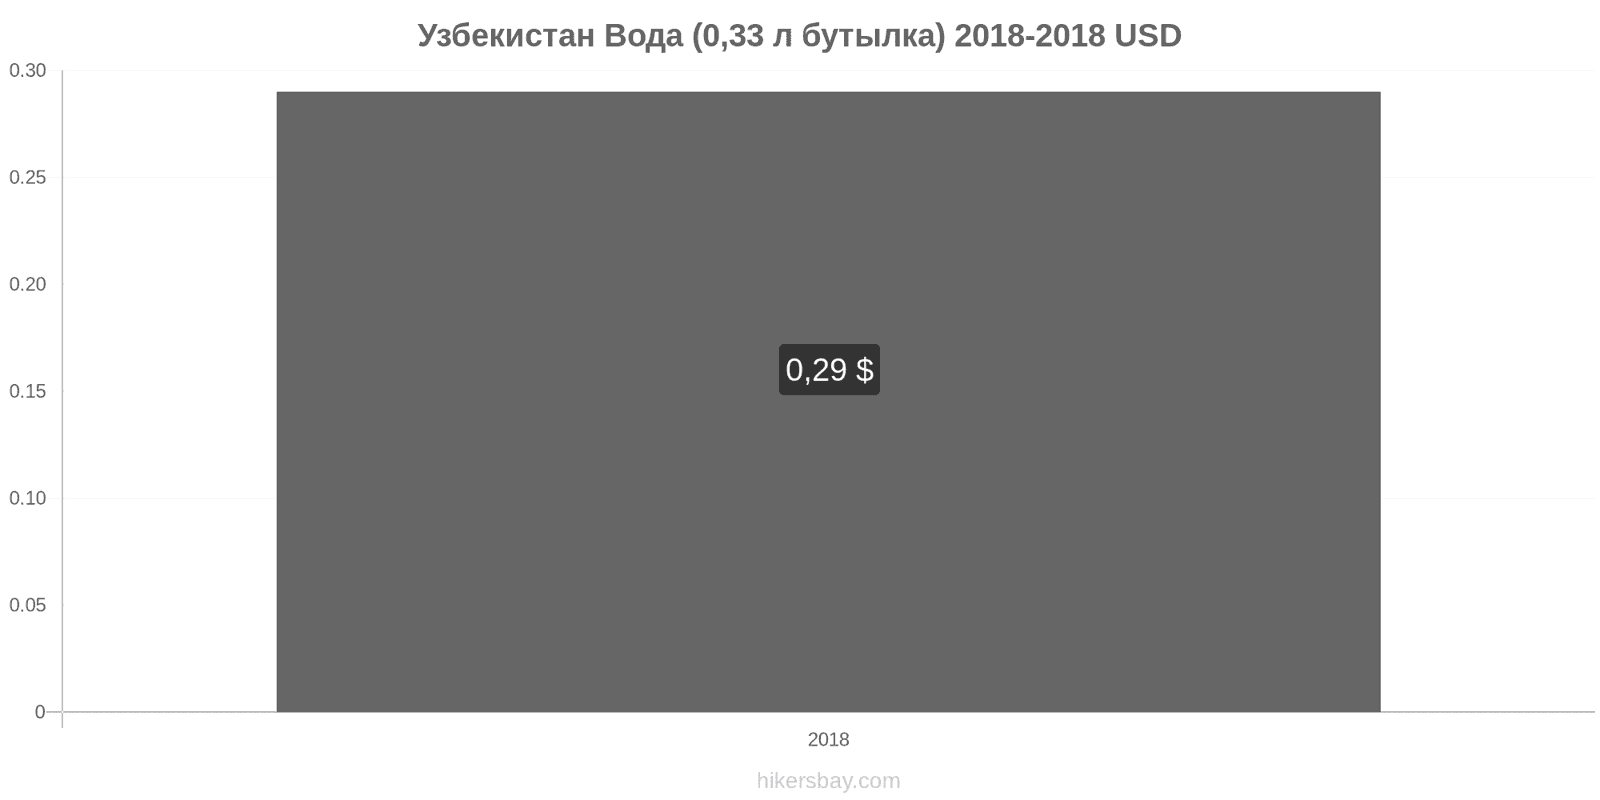 Узбекистан изменения цен Вода (0.33 л бутылка) hikersbay.com